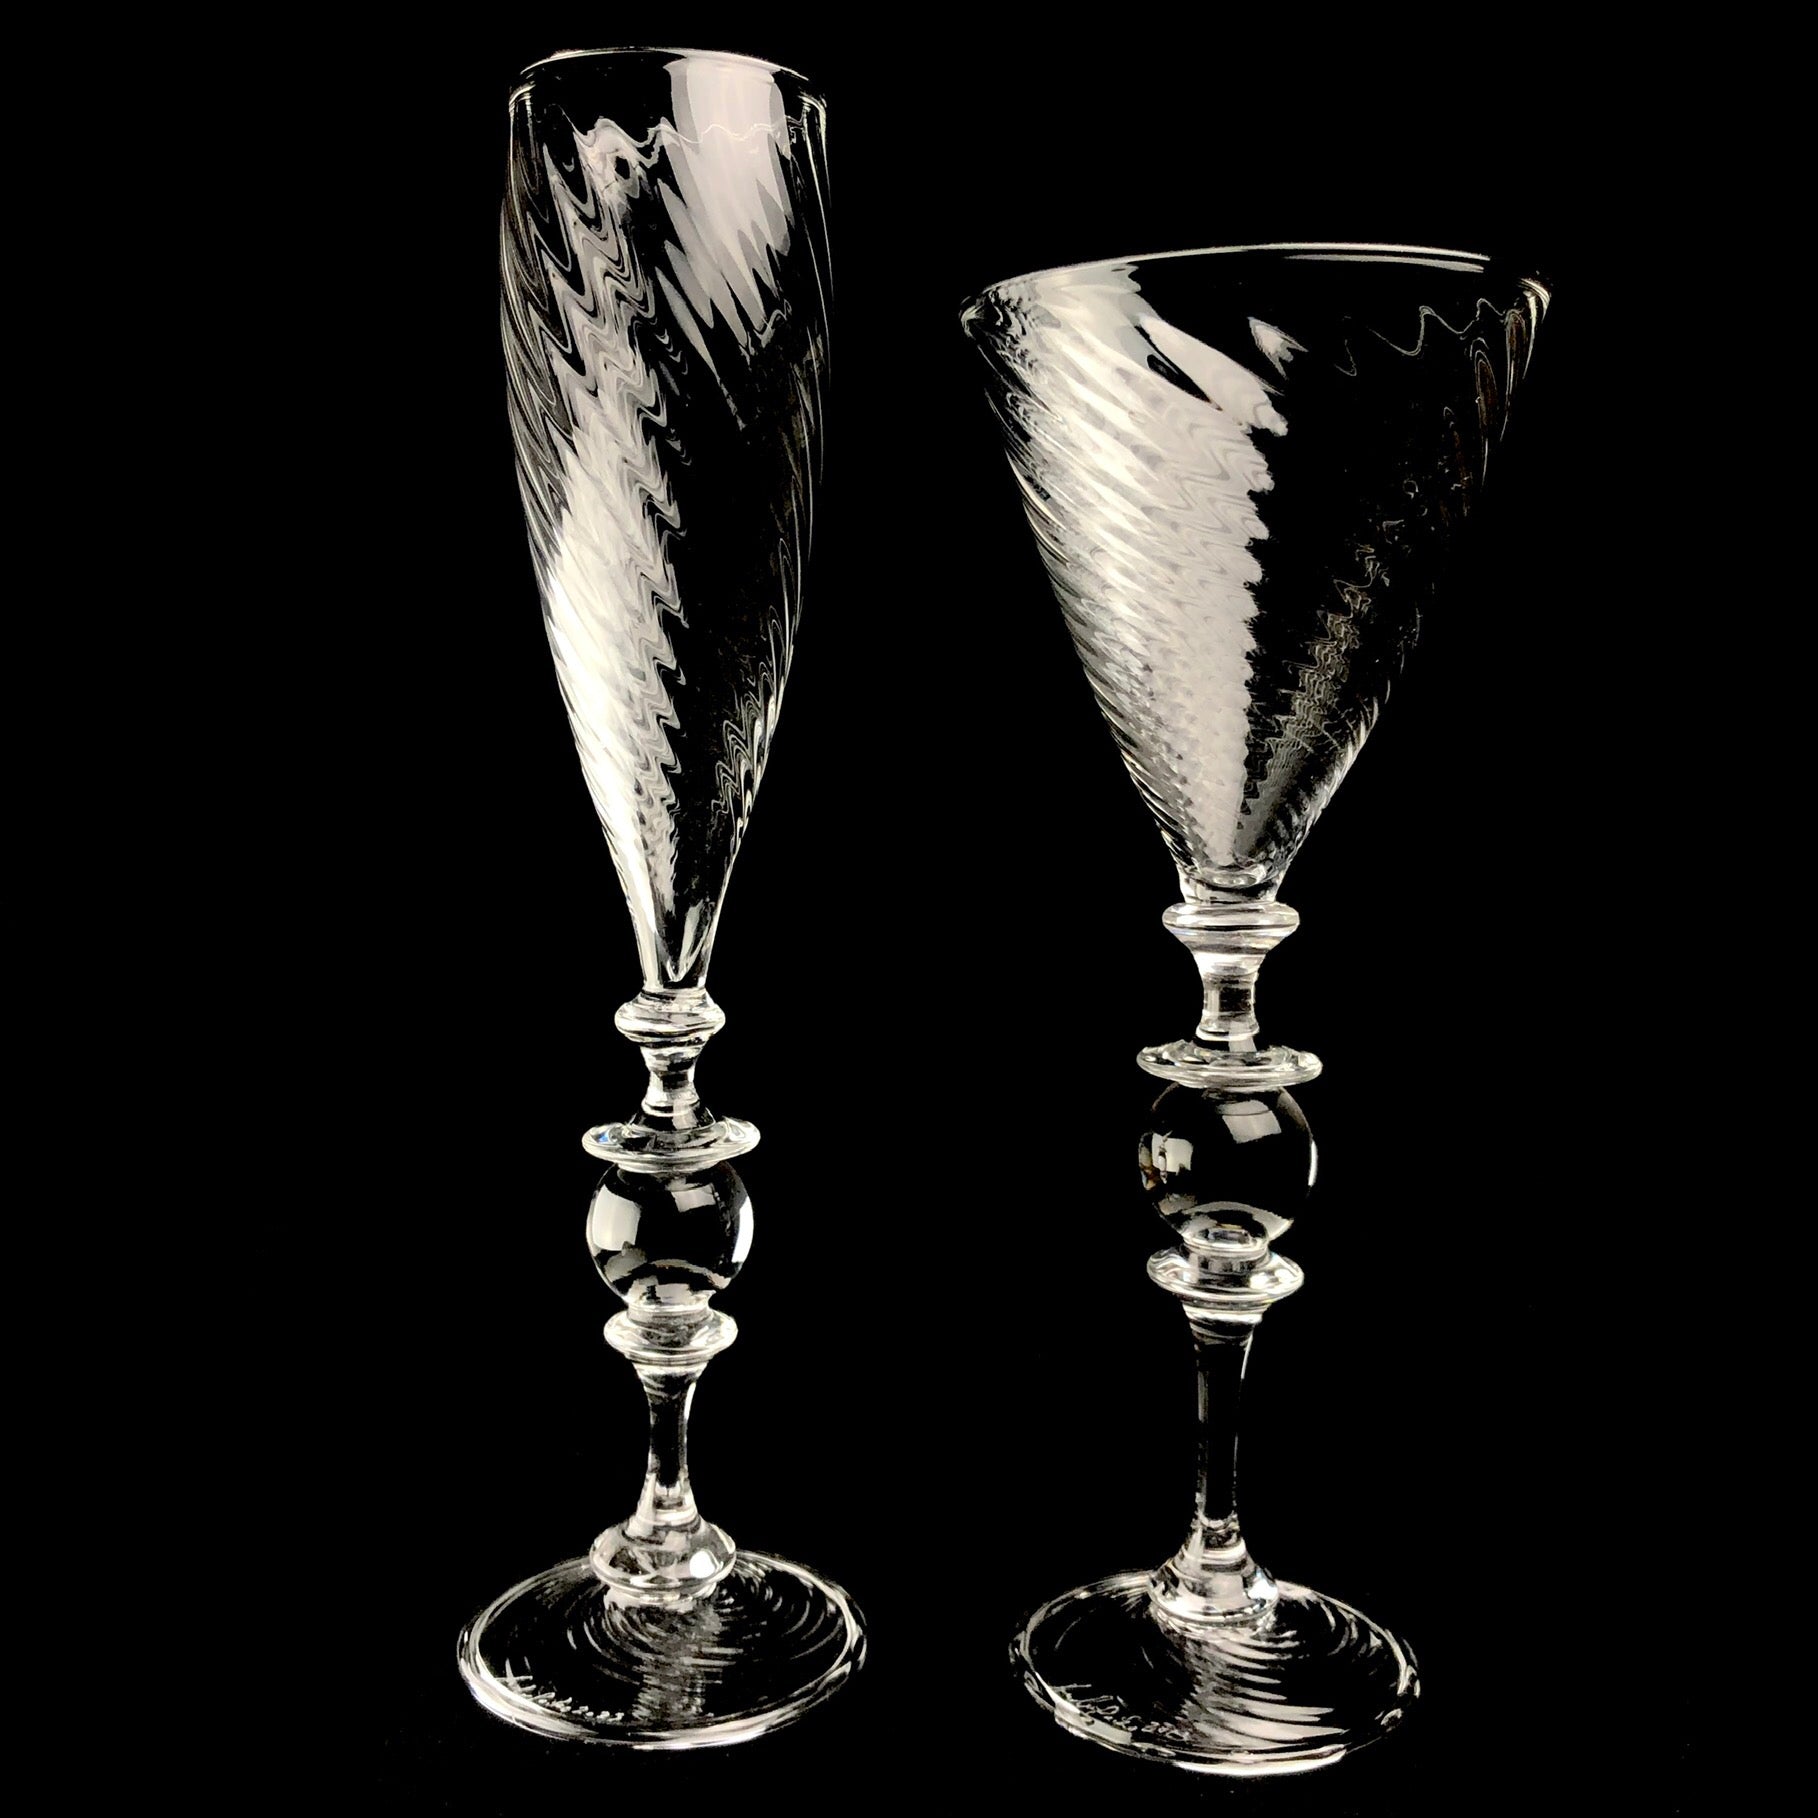 Martini Glass shown next to Champagne Flute